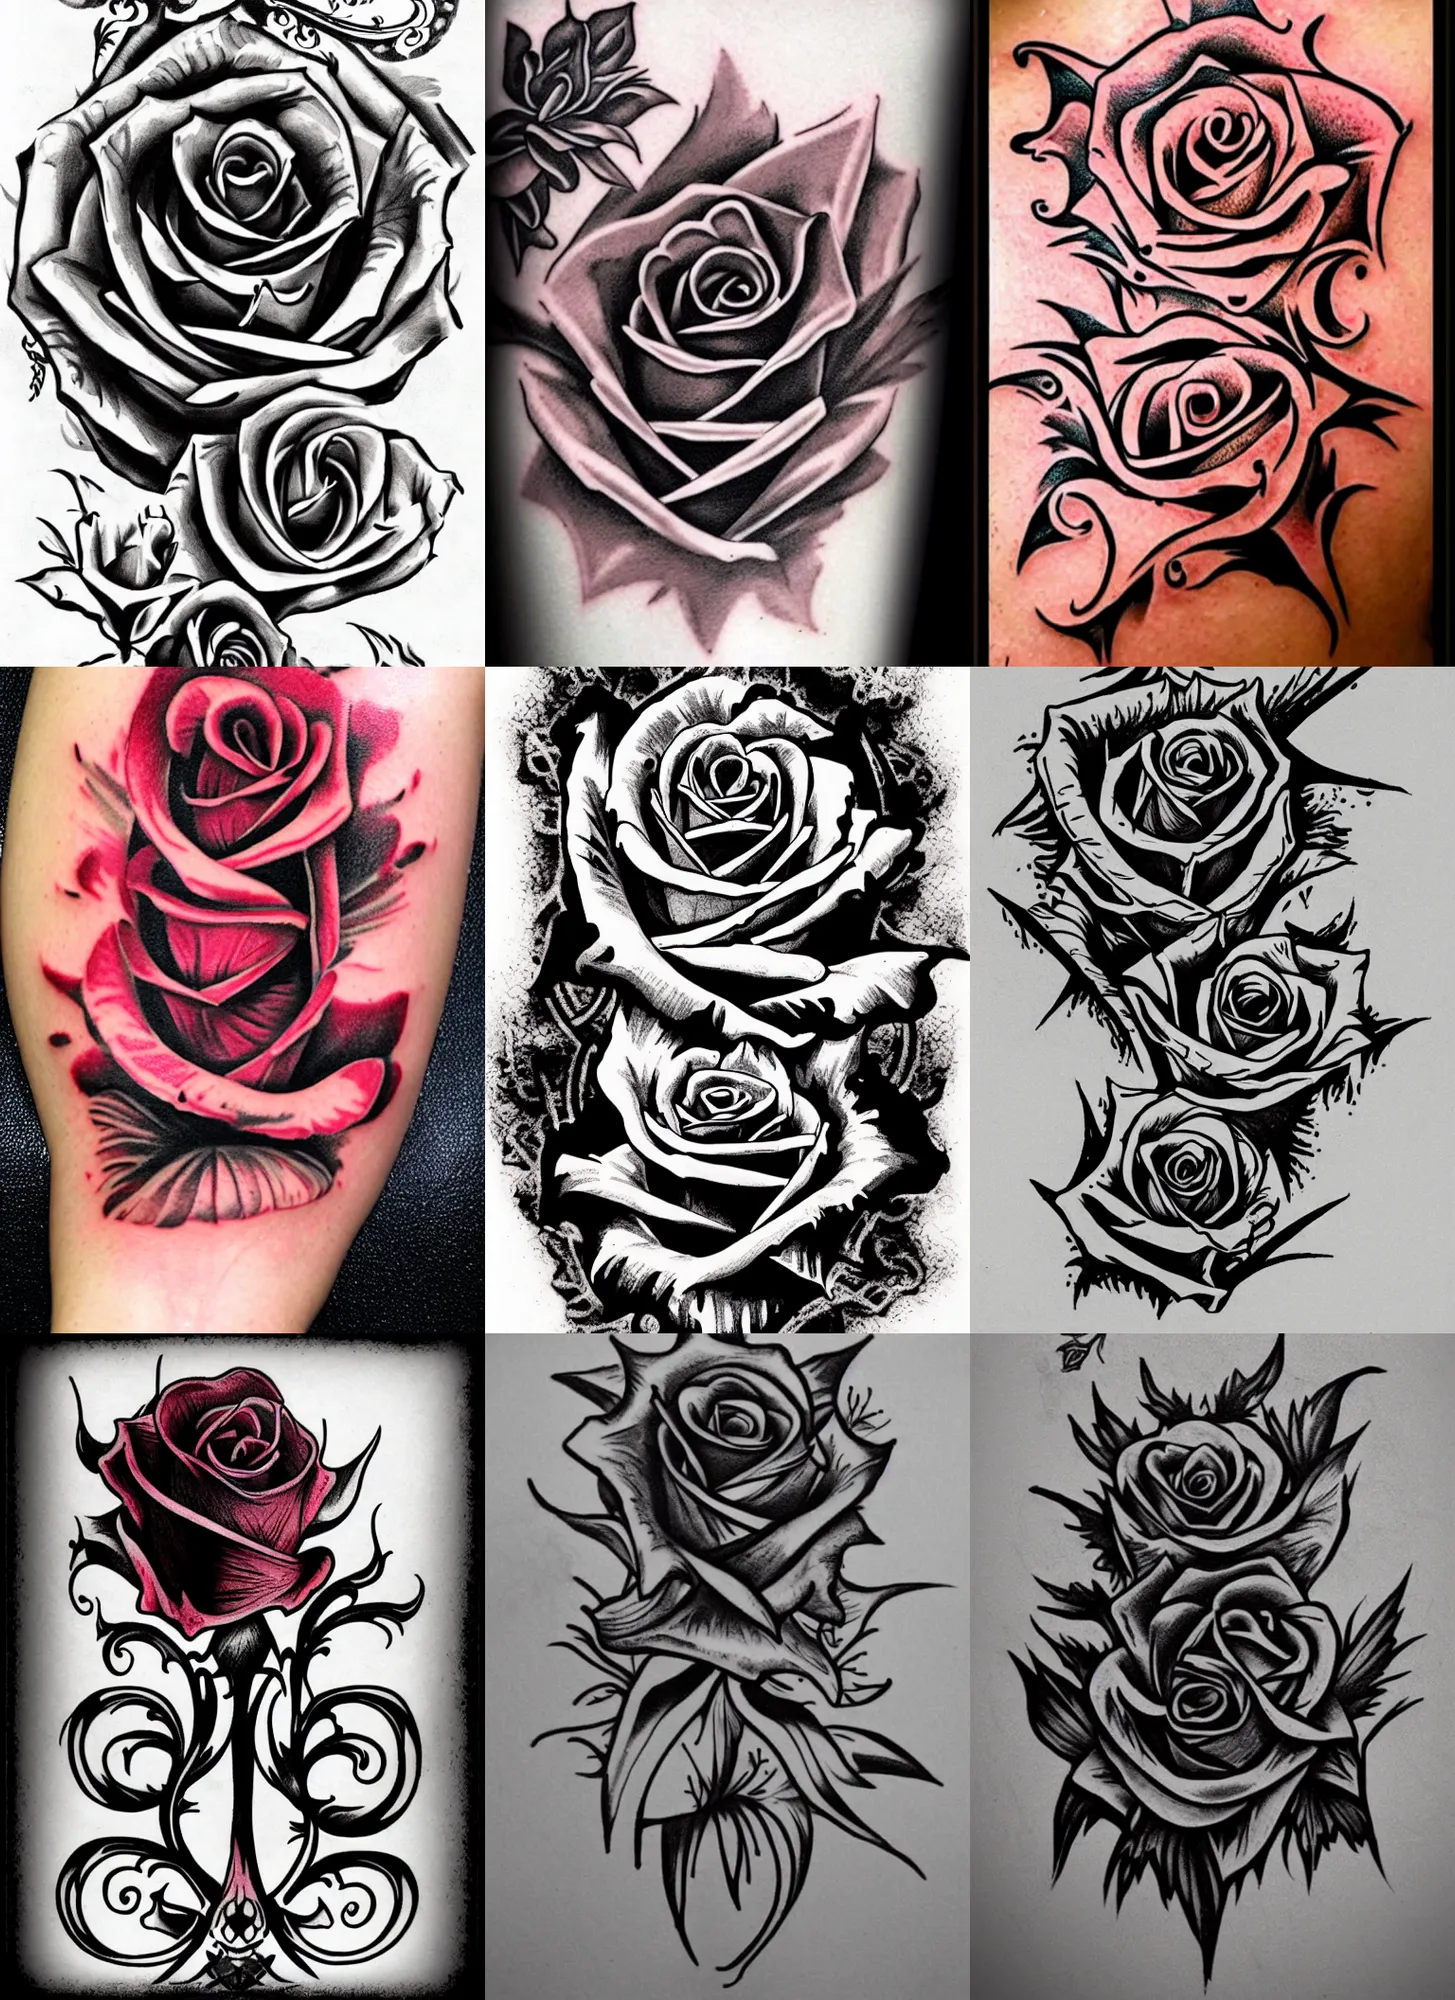 Black and Grey Rose Tattoos - Best Tattoo Ideas Gallery | Black and grey rose  tattoo, Black rose tattoos, Black and grey rose